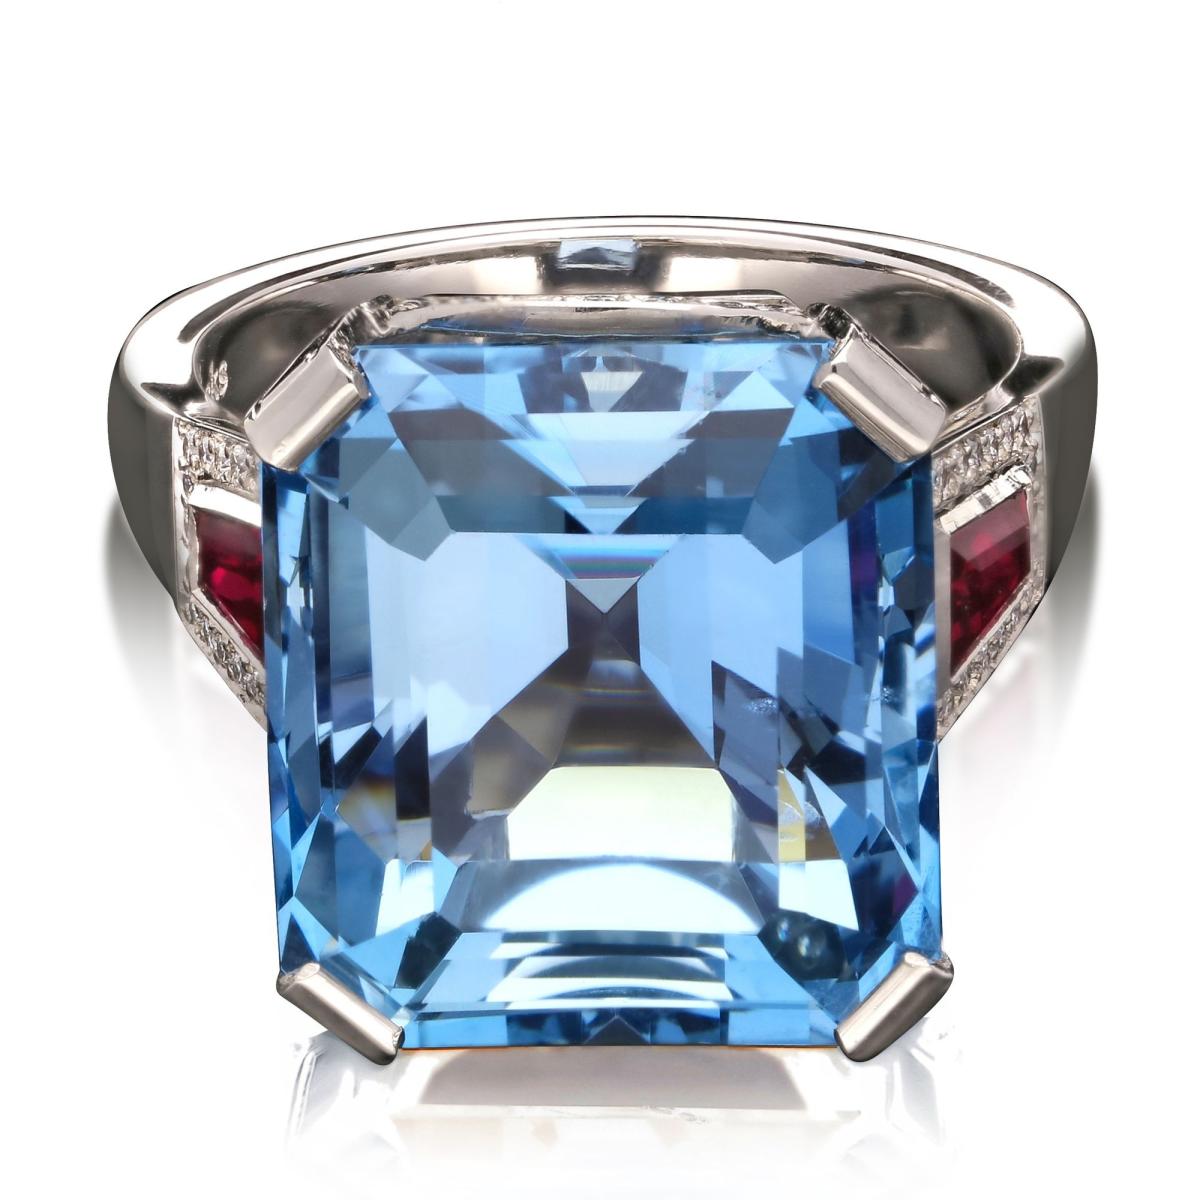 Hancocks 14.17ct Aquamarine Ruby And Diamond Cocktail Ring Contemporary